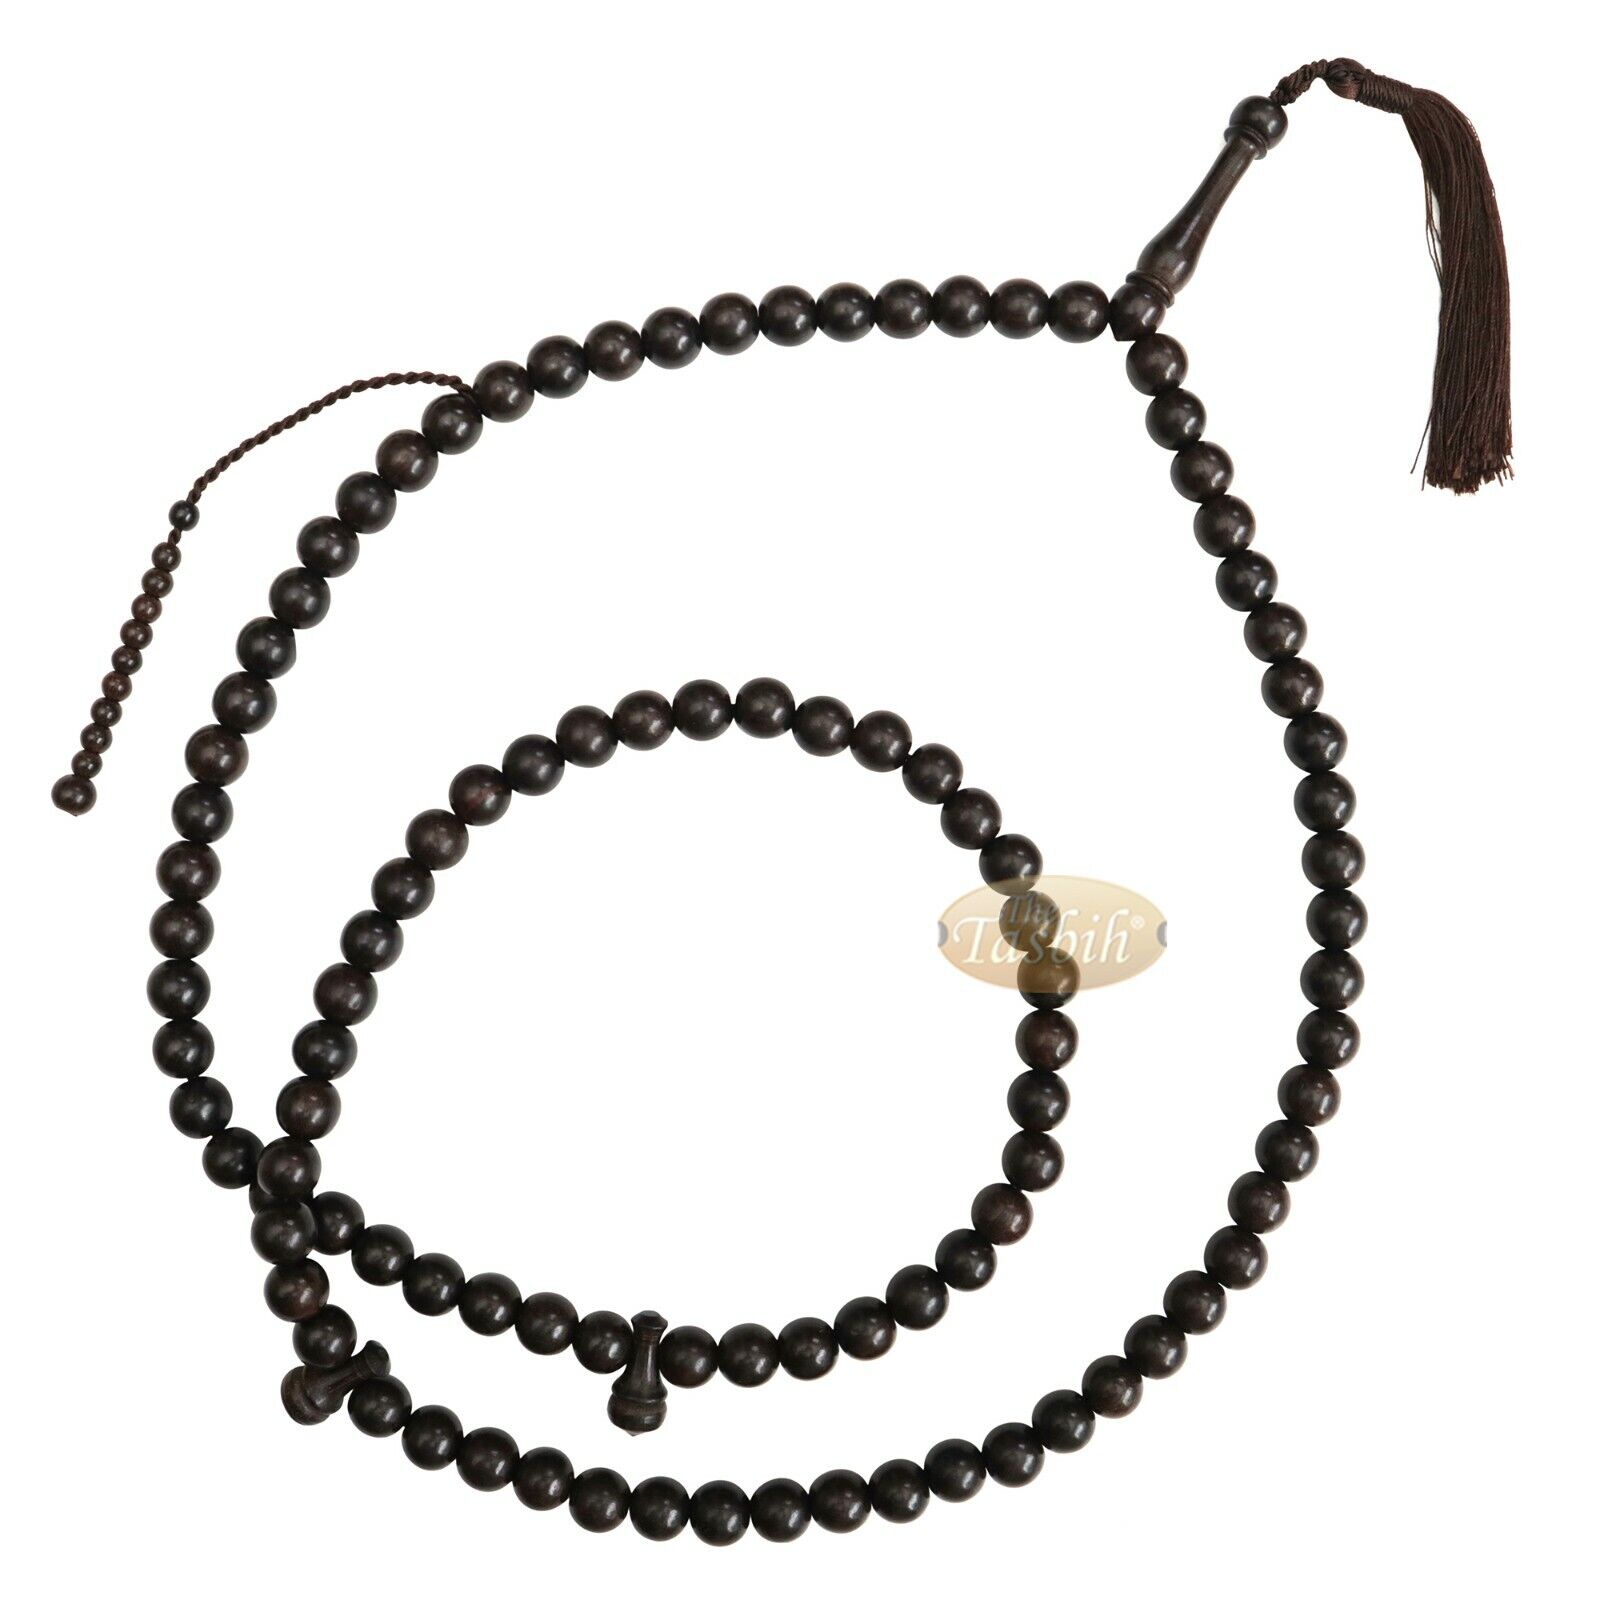 Unique Extra Large Dense Tamarind Wood Tasbih Islamic Prayer Beads - 12mm Beads